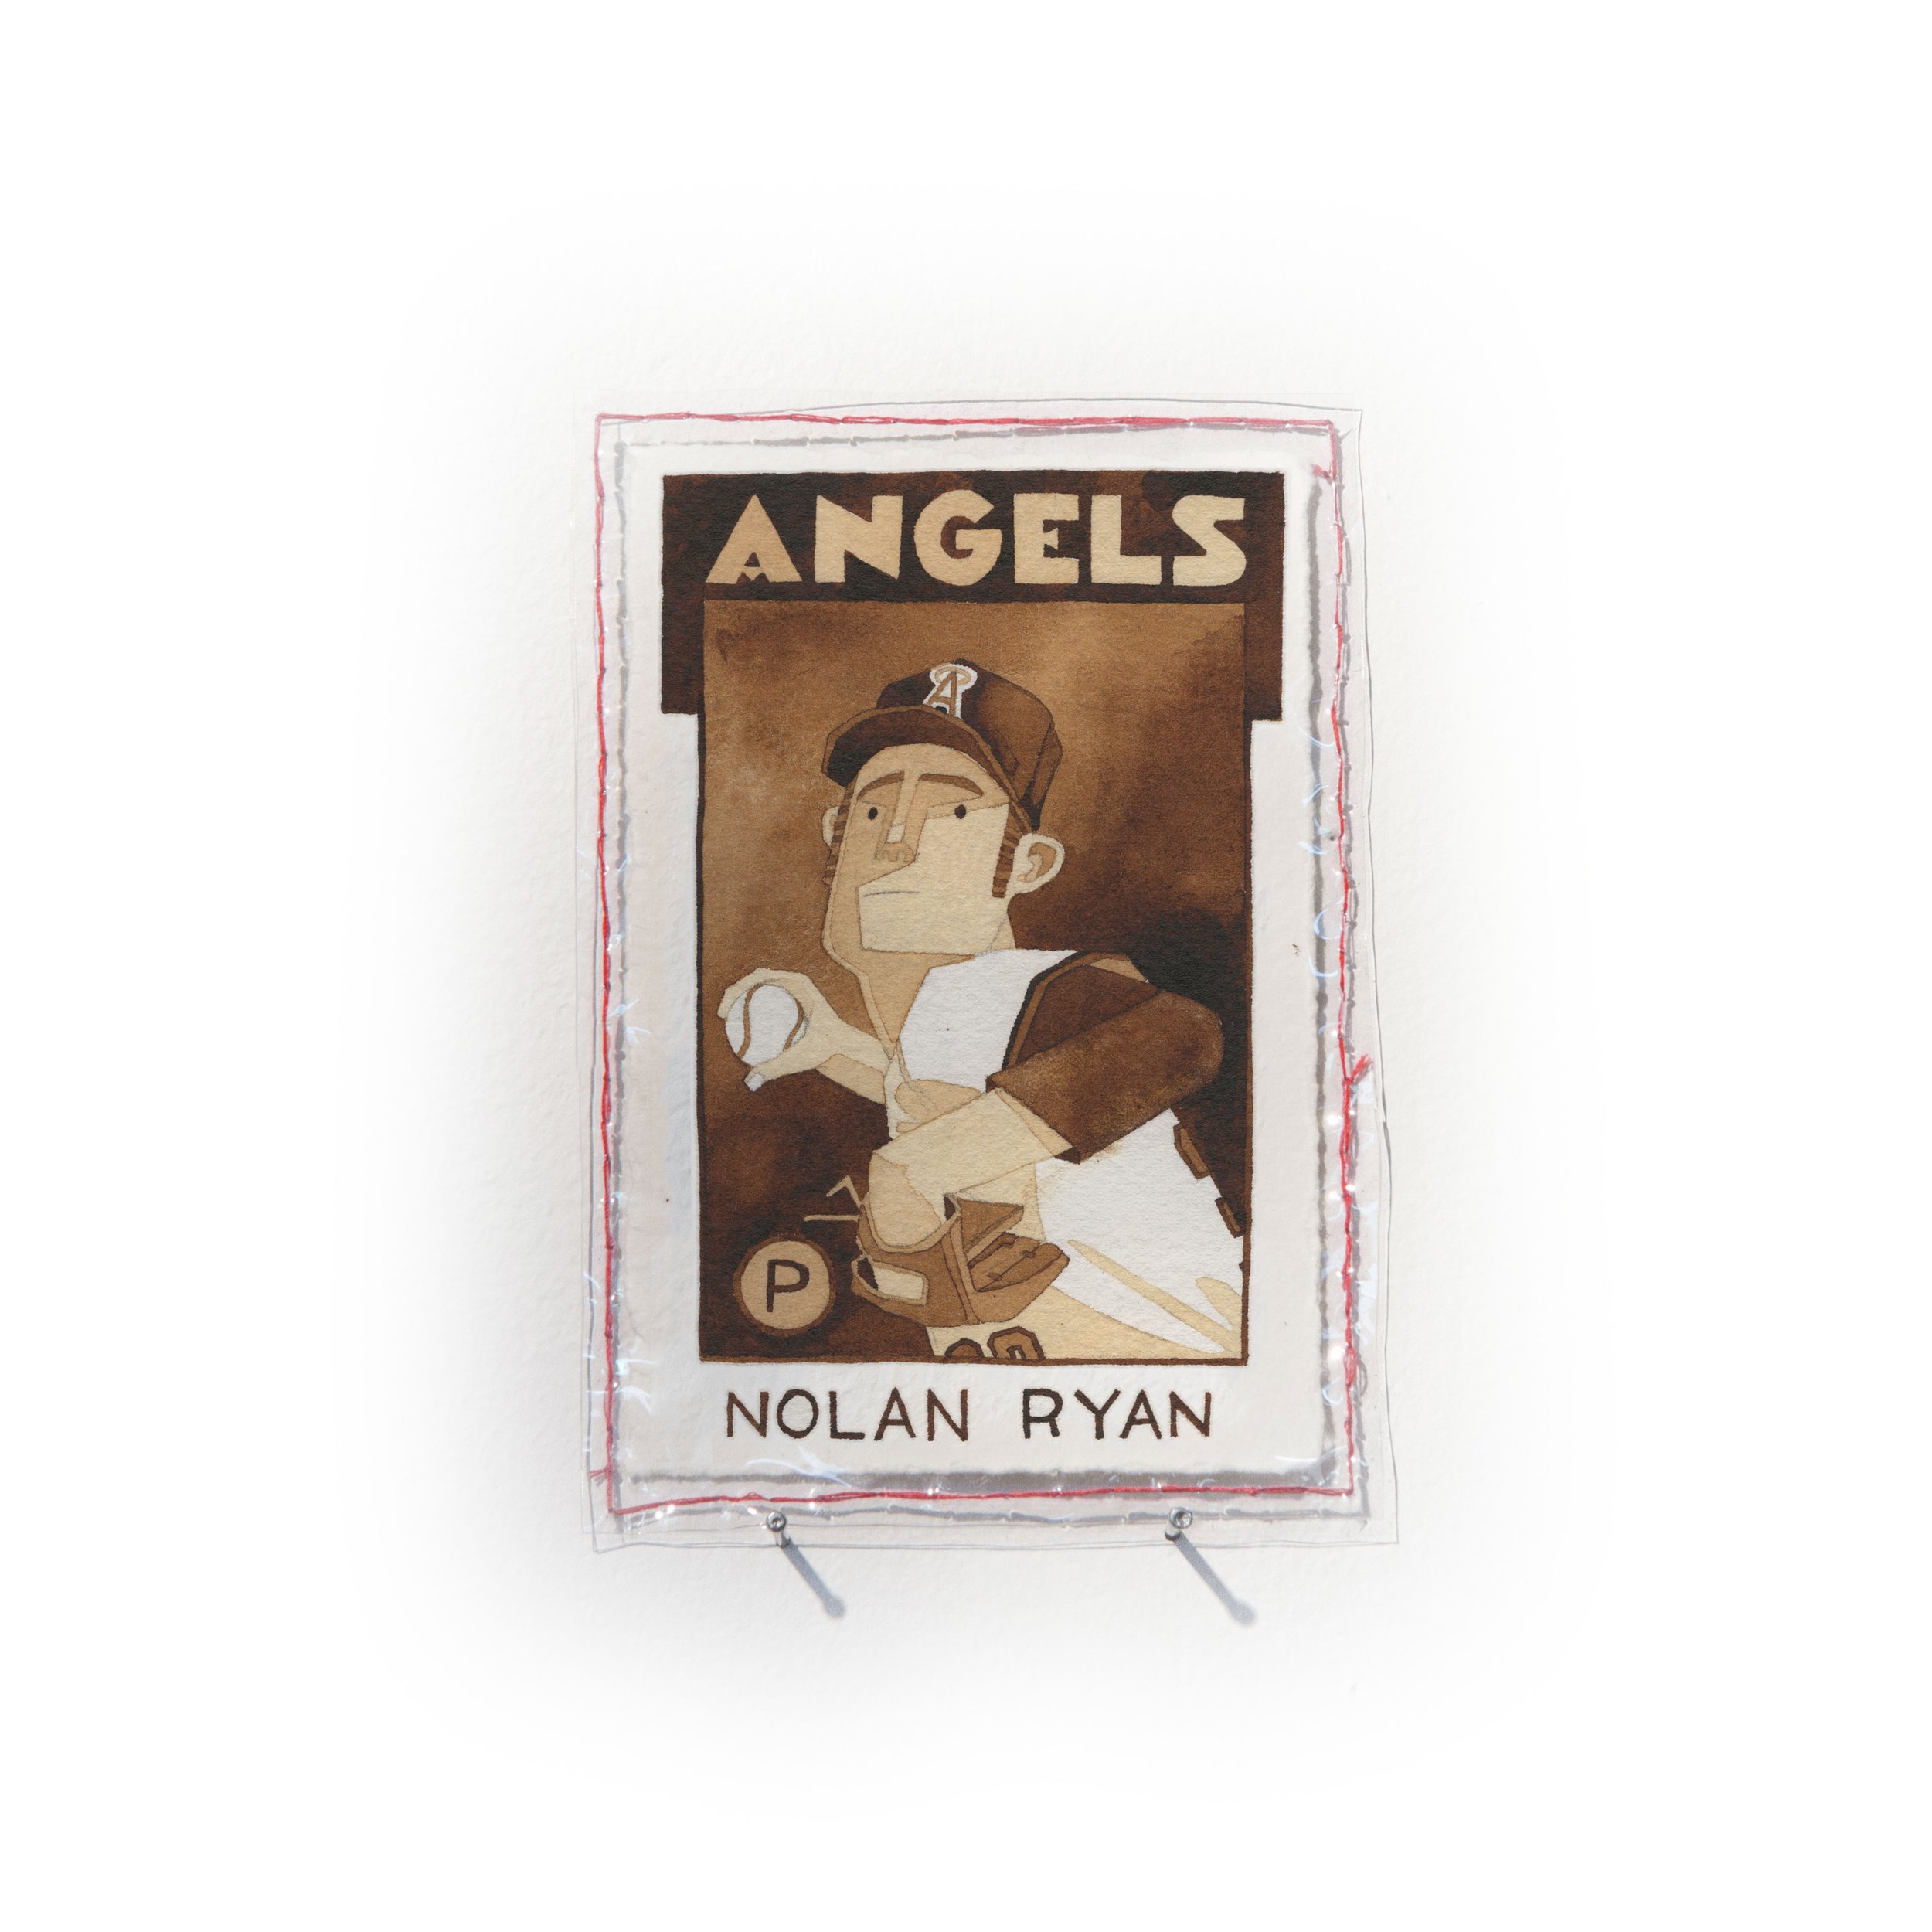 Nolan Ryan of the California Angels